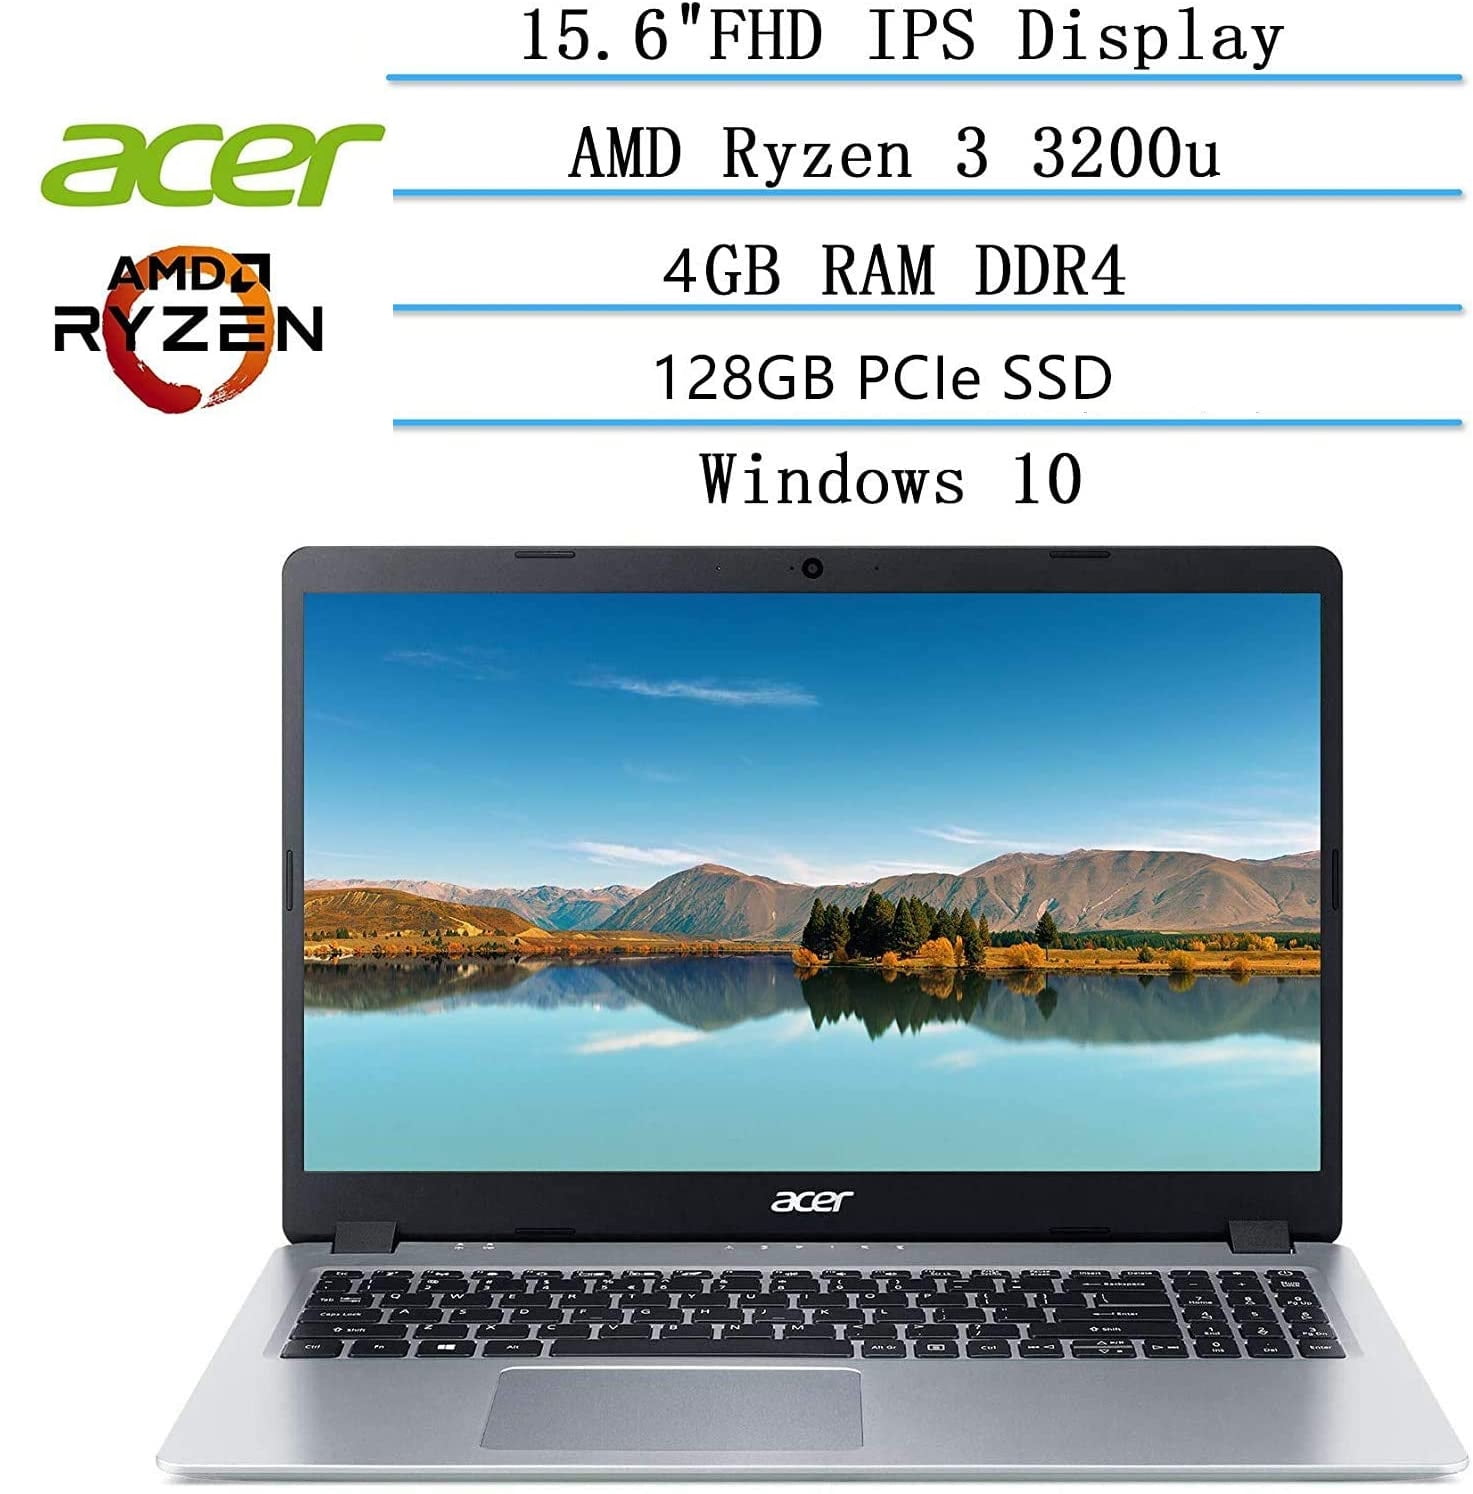 2021 Newest Acer Aspire 5 Slim Laptop 15.6 FHD IPS Display, AMD Ryzen 3  3200u-Dual Core (up to 3.5GHz), Vega 3 Graphics, 8GB RAM DDR4, 1TB HDD,  Windows 10 HDMI - Walmart.com